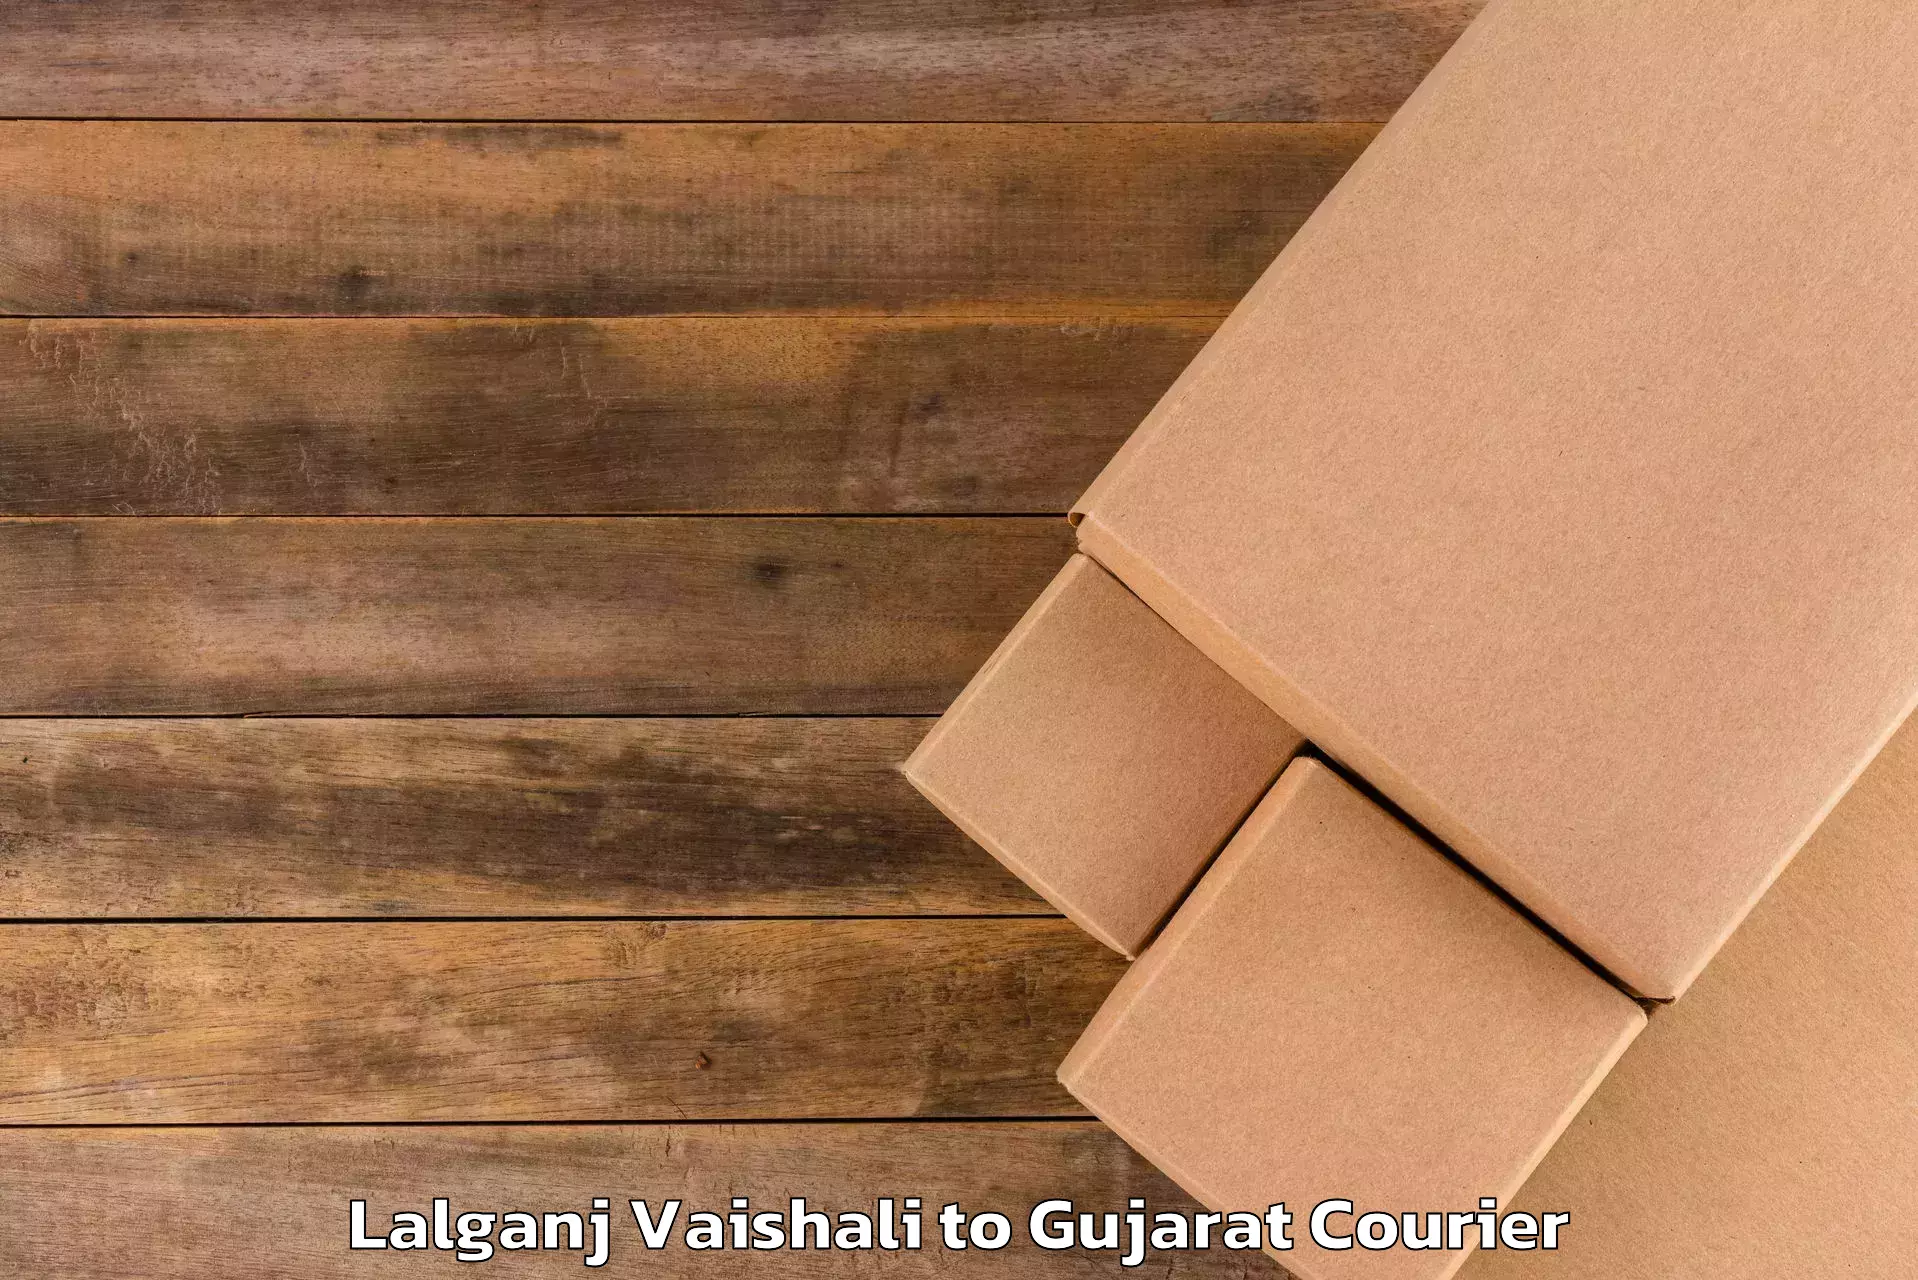 Emergency baggage service Lalganj Vaishali to Gujarat